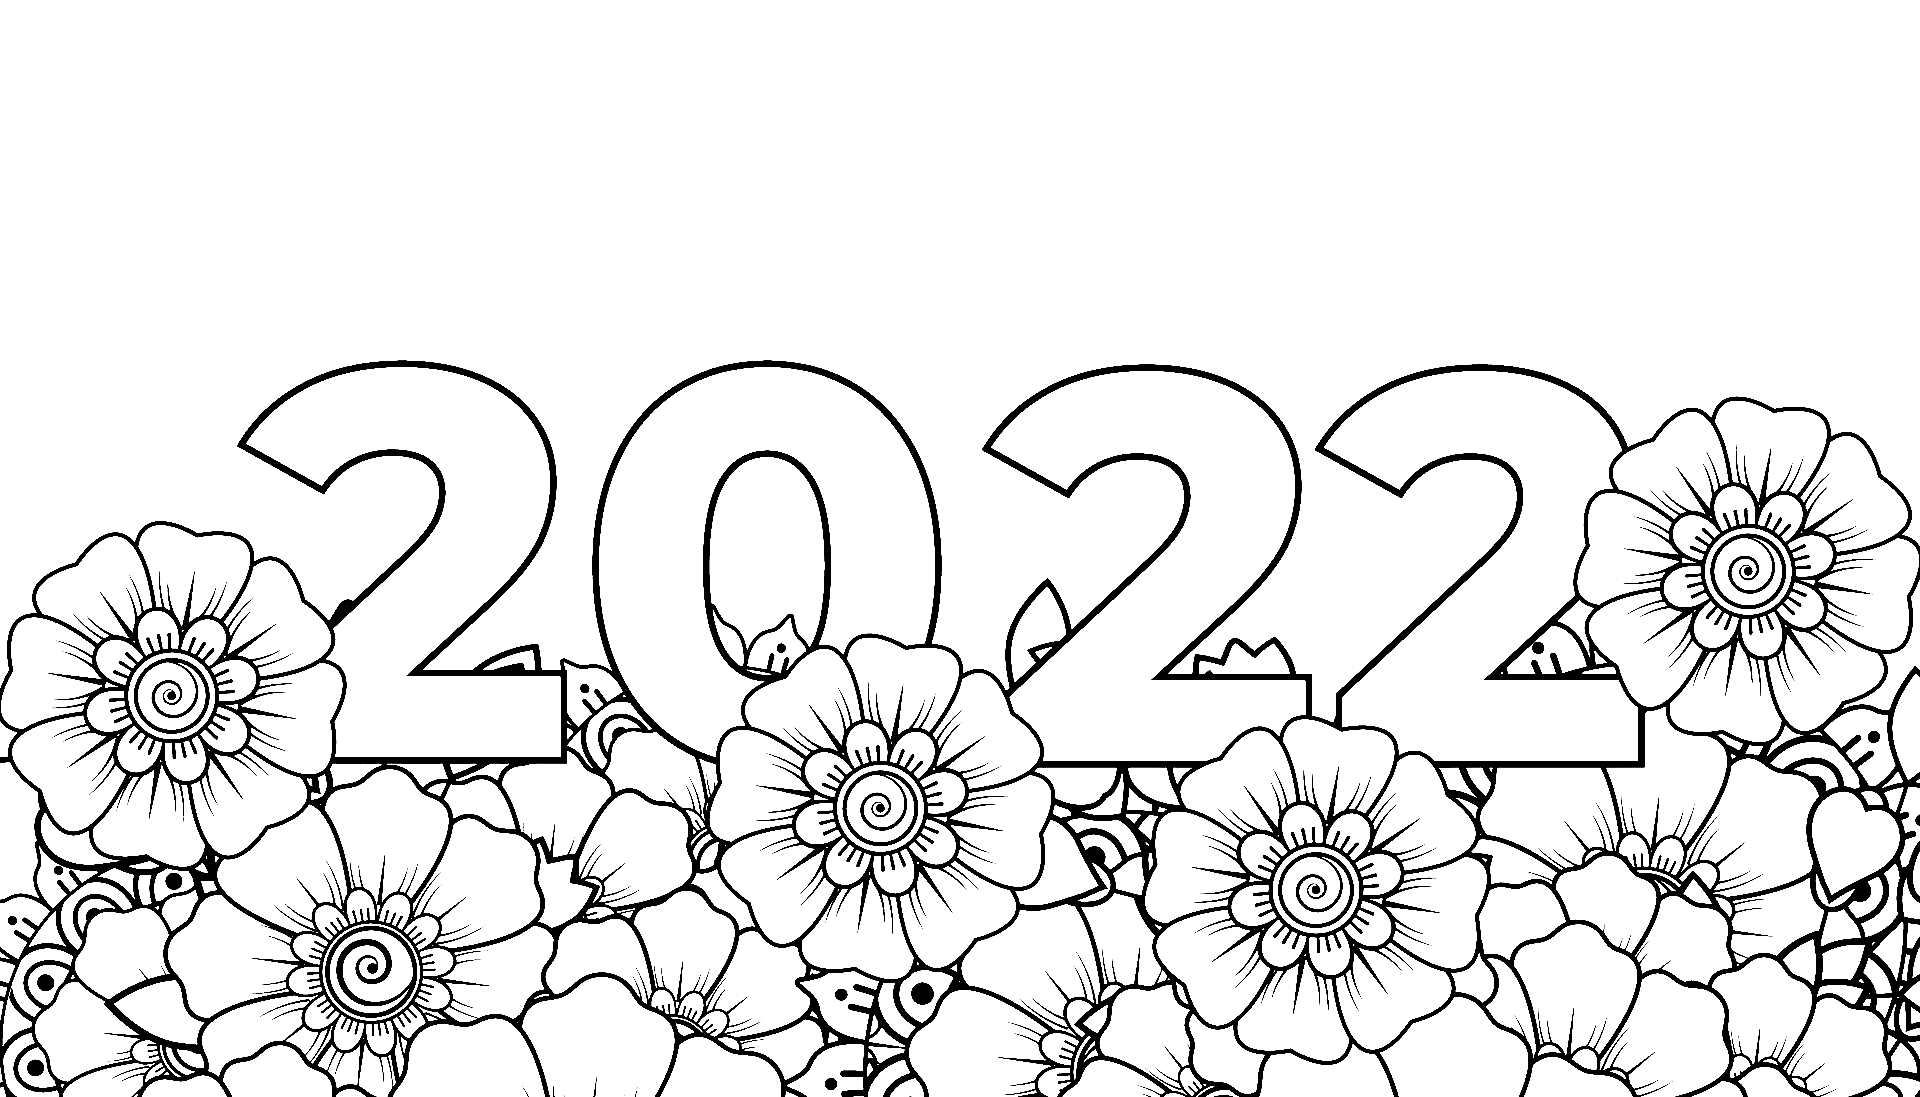 Раскраска 2022. Раскраски 2022 модные. Раскраска 2022 год. Разукрашка 2022 год.